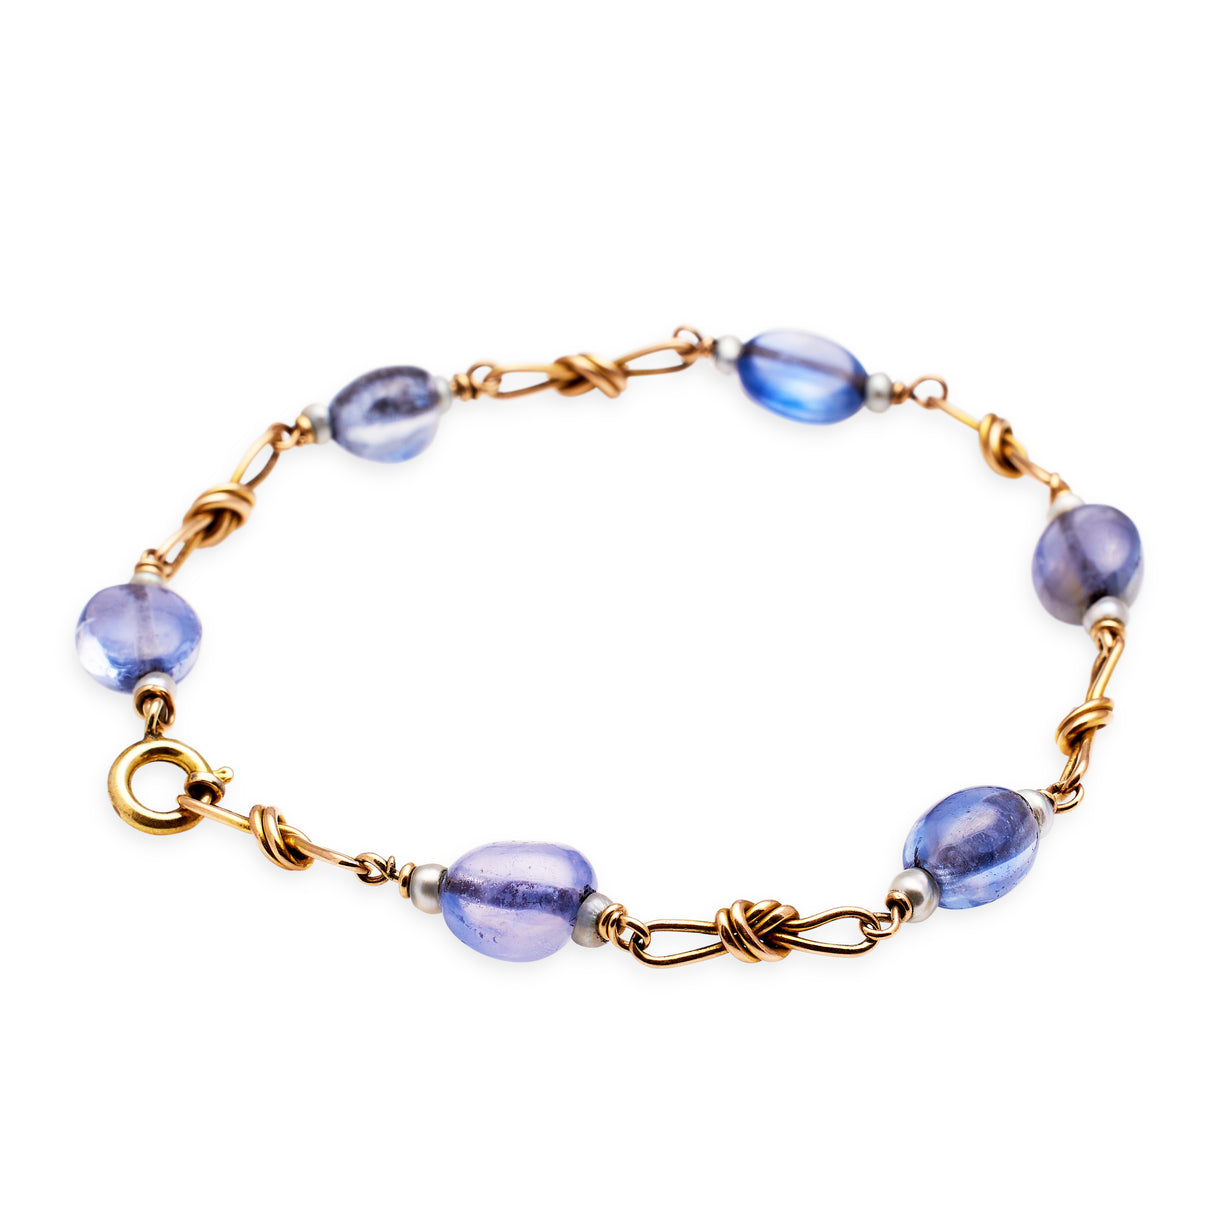 Antique-Sapphire-Bracelet-15ct-Yellow-Gold-Pearl-Vintage